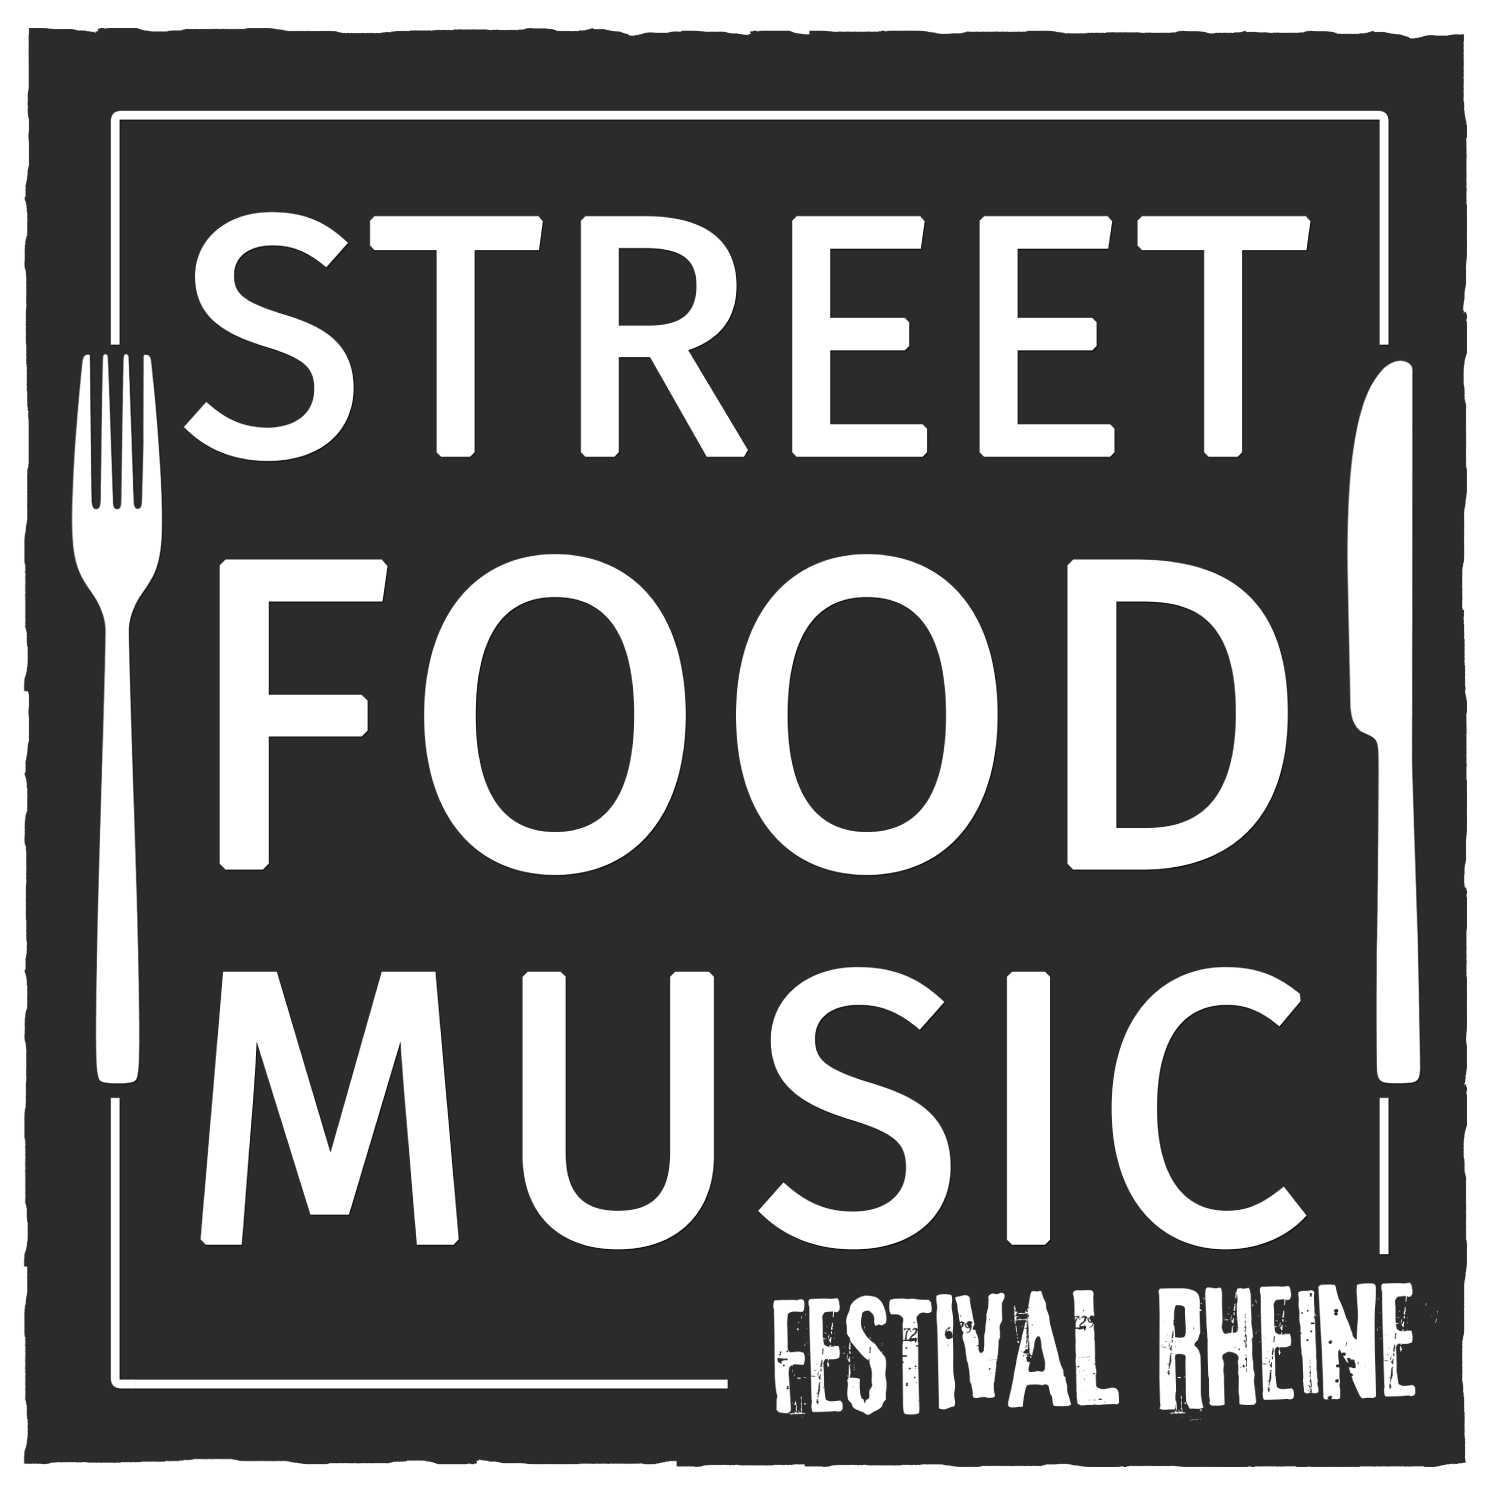 Street Food & Music Festival Rheine